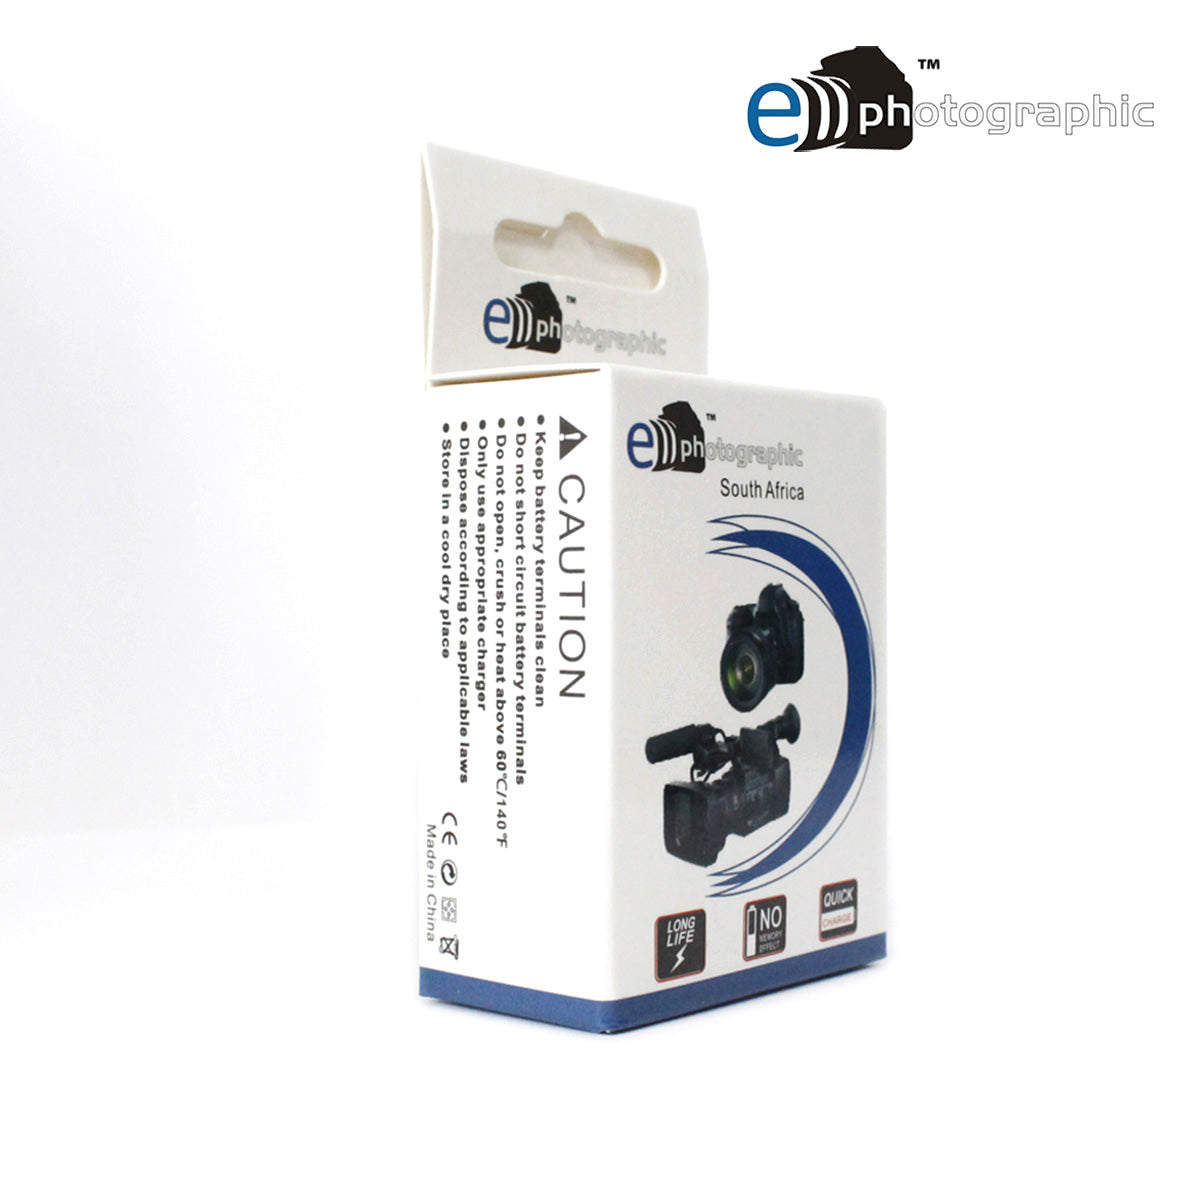 E-Photographic 1600 mAh Lithium Battery for FujiFilm W126/S - EPHNPW126S